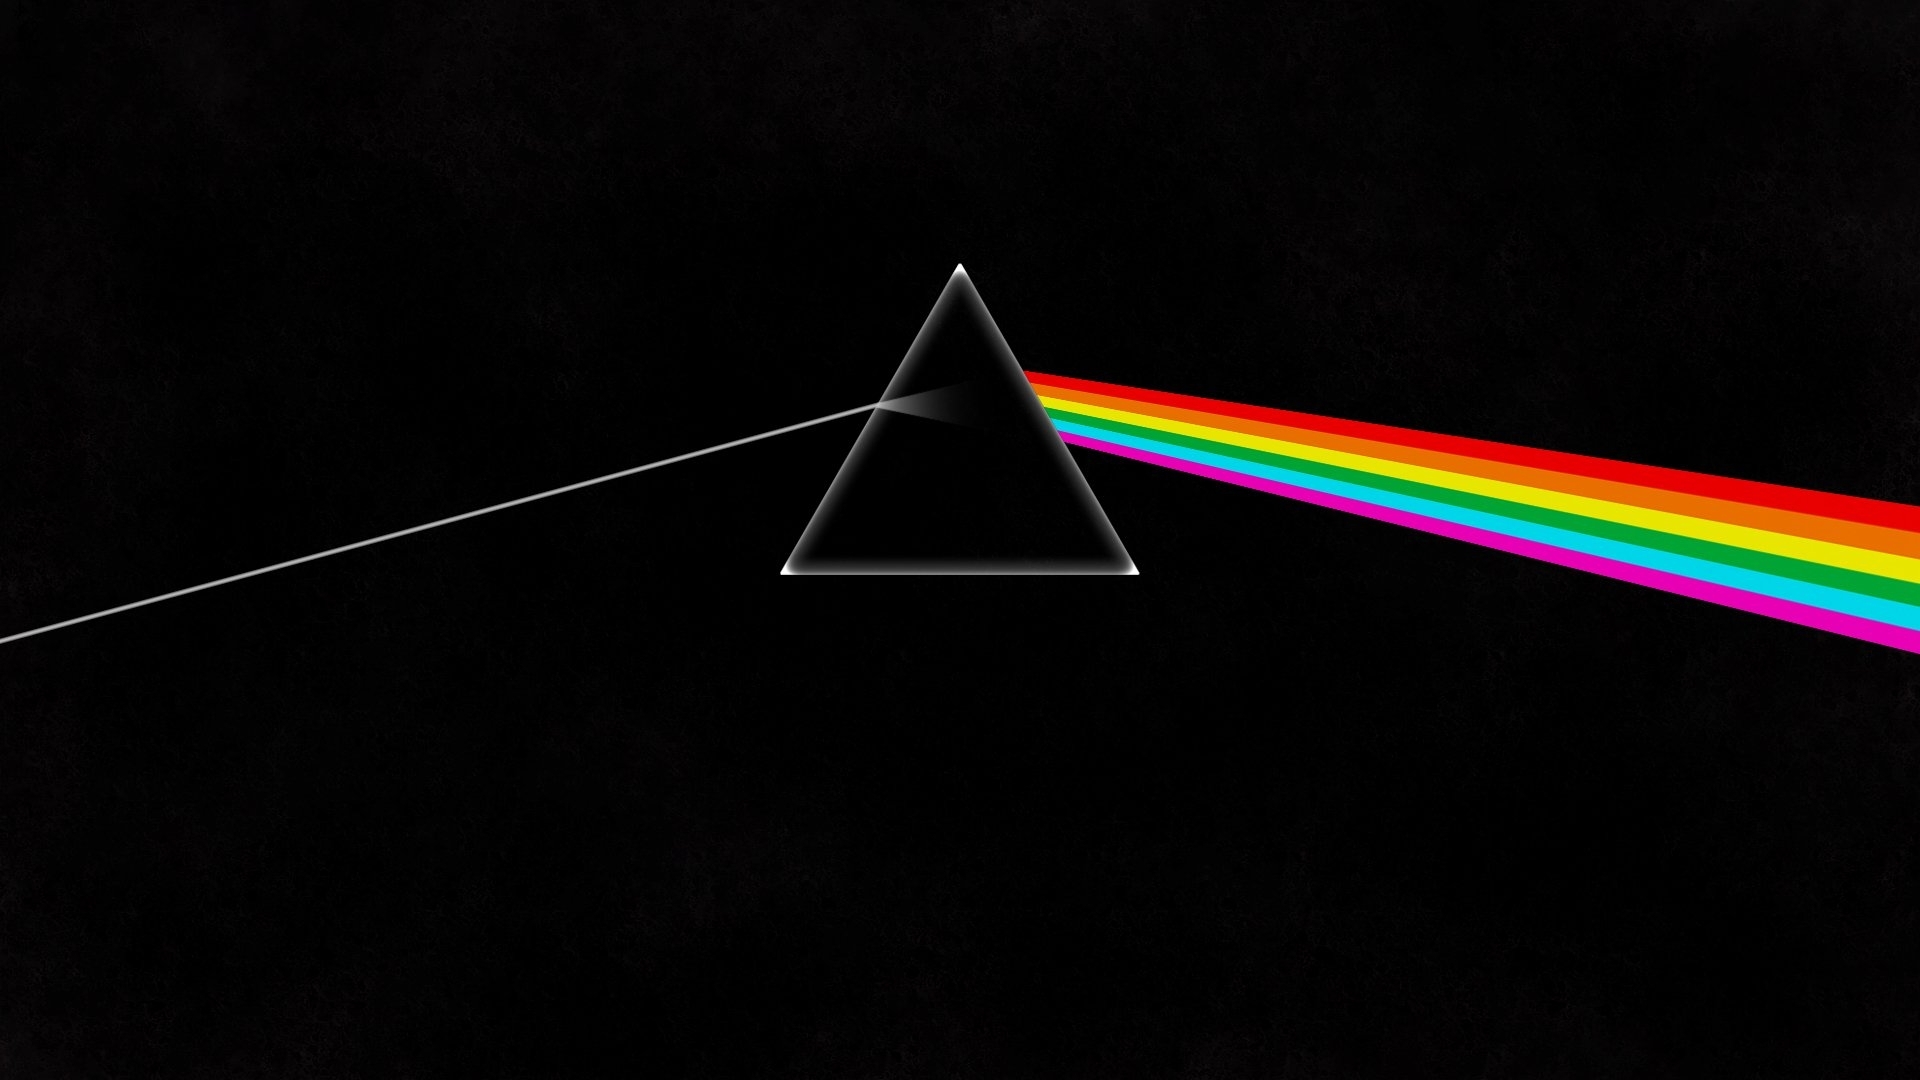 10 Best Pink Floyd Phone Wallpapers FULL HD 1080p For PC Desktop 2020.